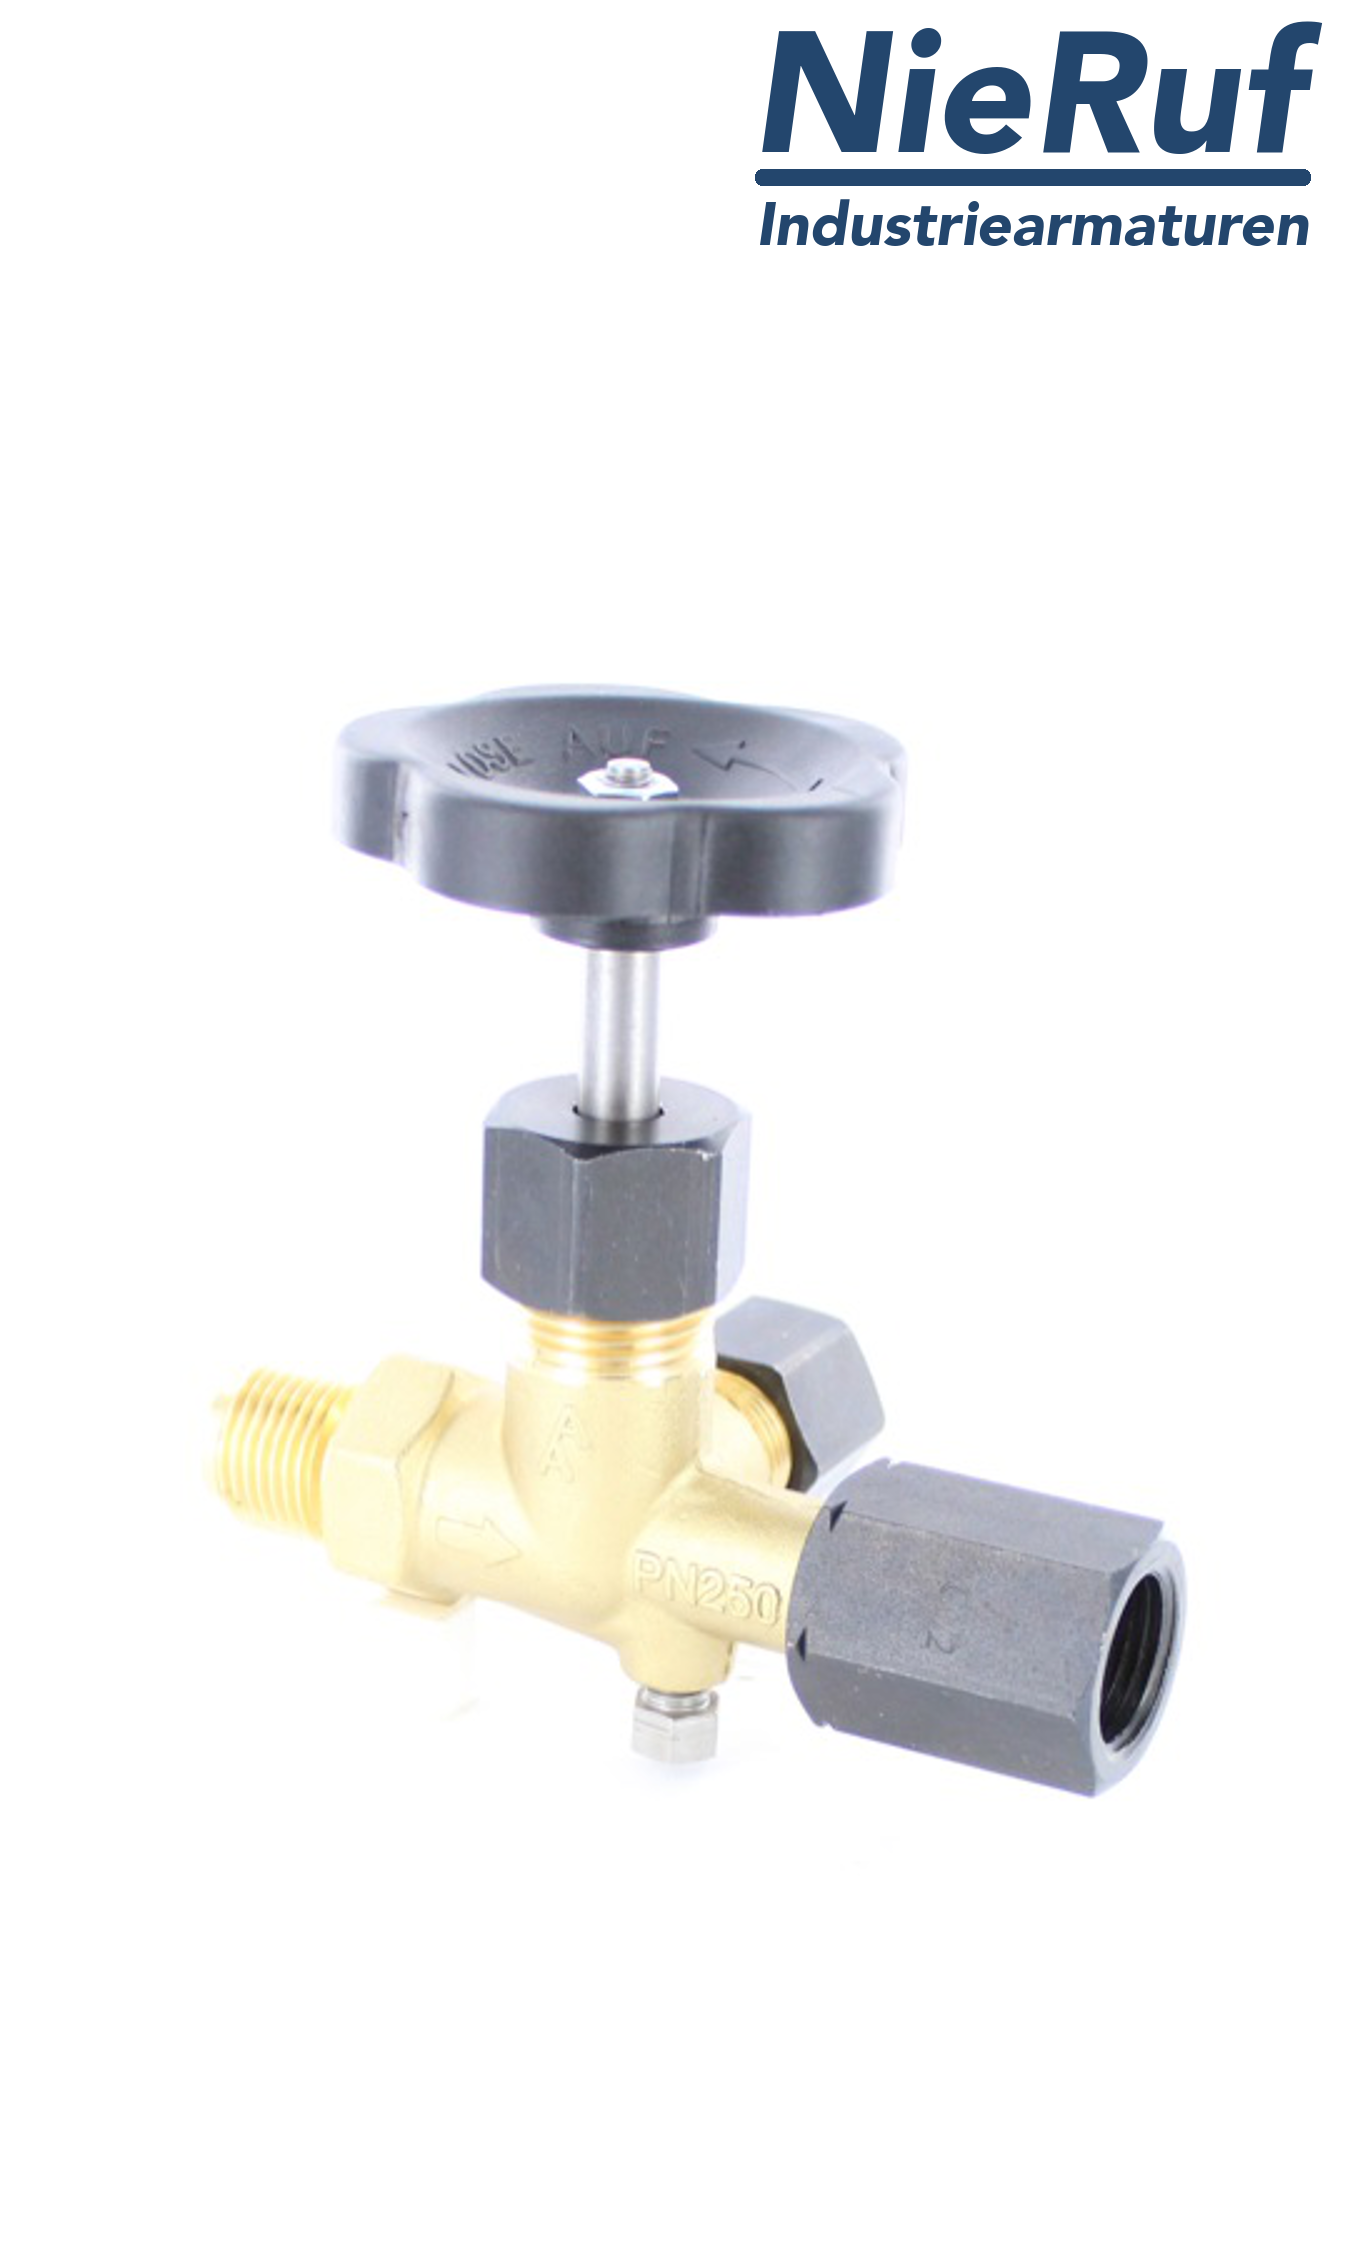 manometer gauge valves male thread x sleeve x test connector M20x1,5 DIN 16271 brass 250 bar